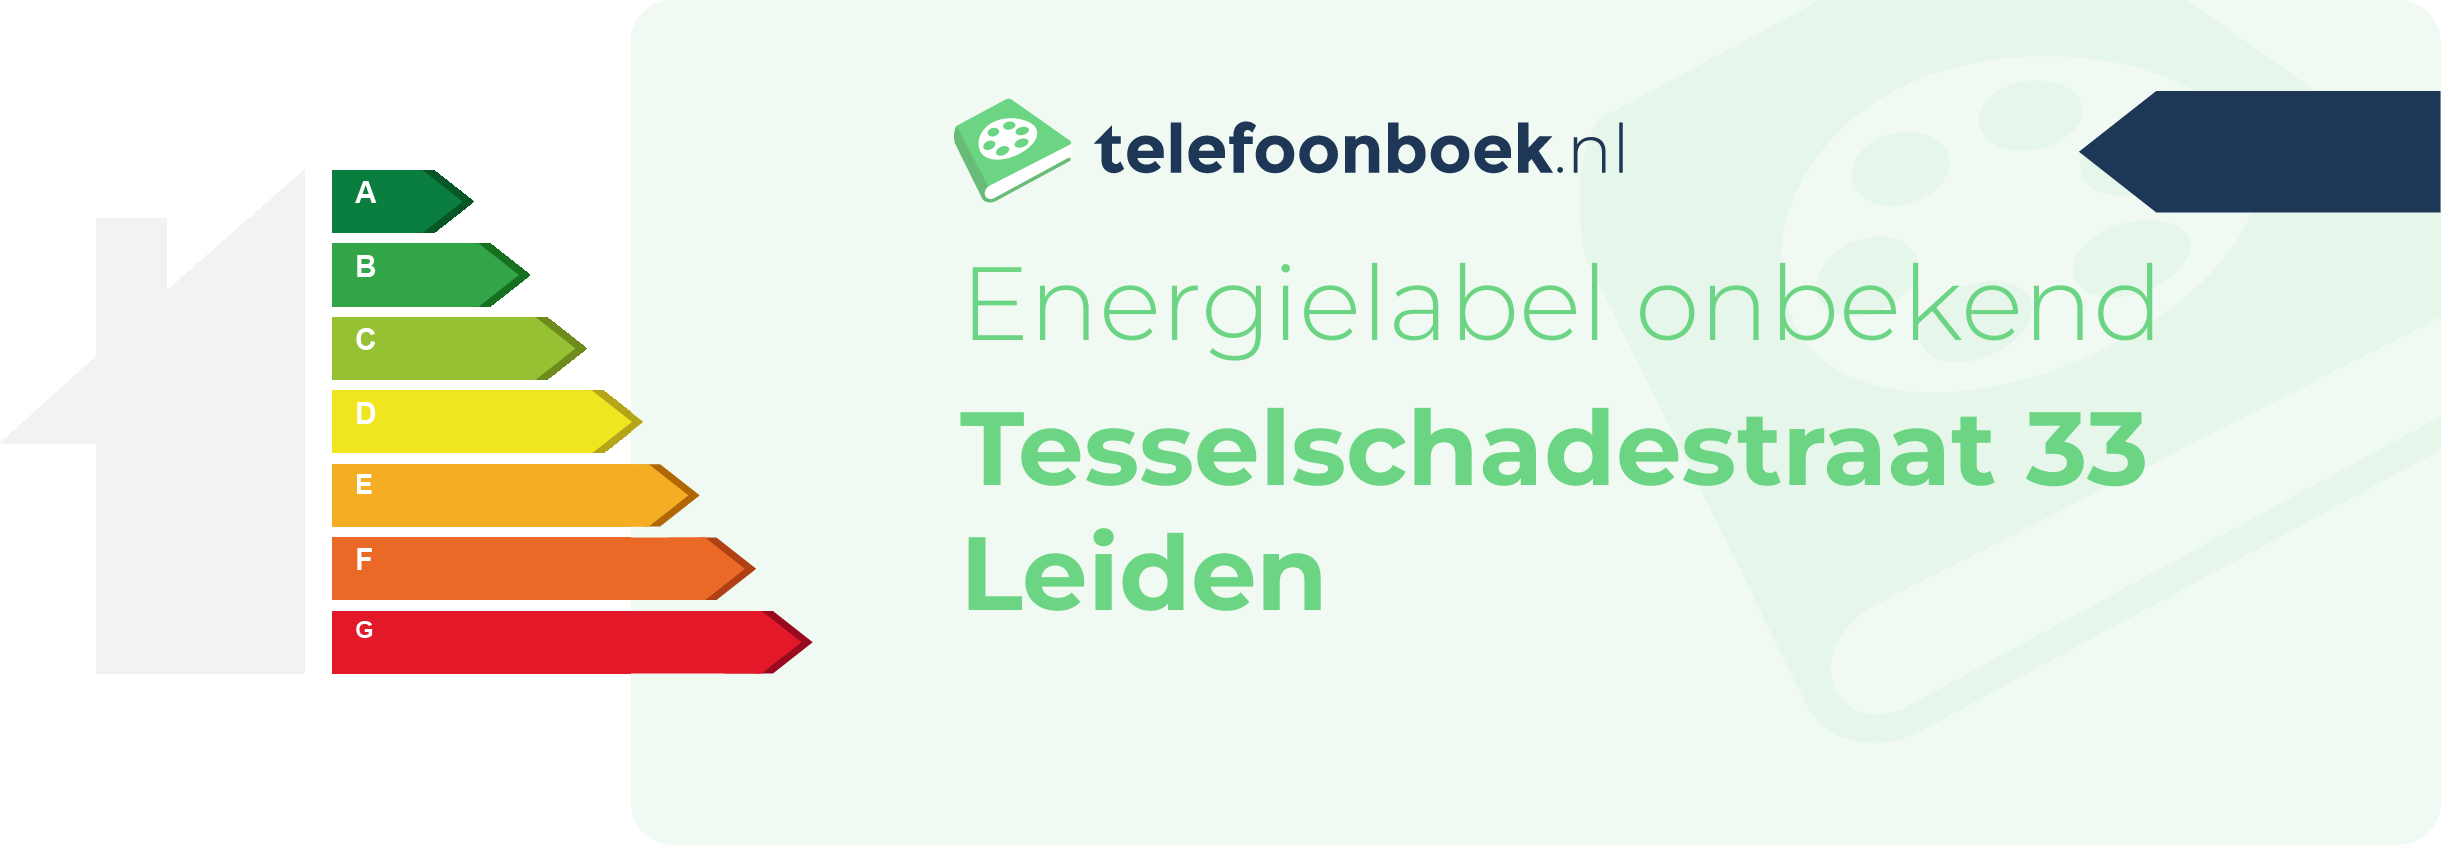 Energielabel Tesselschadestraat 33 Leiden